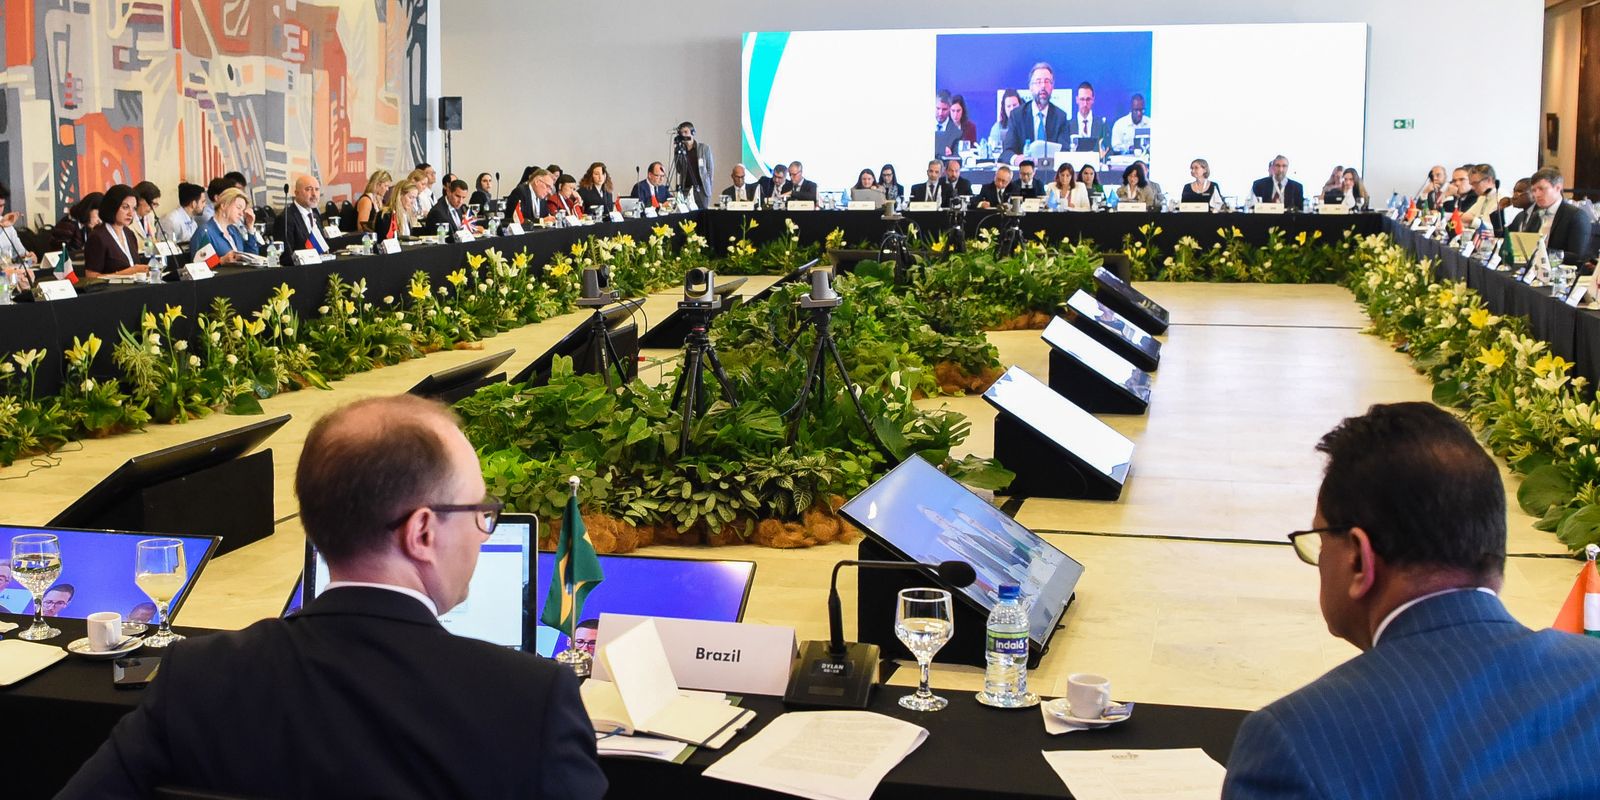 urgencia-de-acoes-para-o-combate-a-fome-e-consenso-entre-paises-do-g20